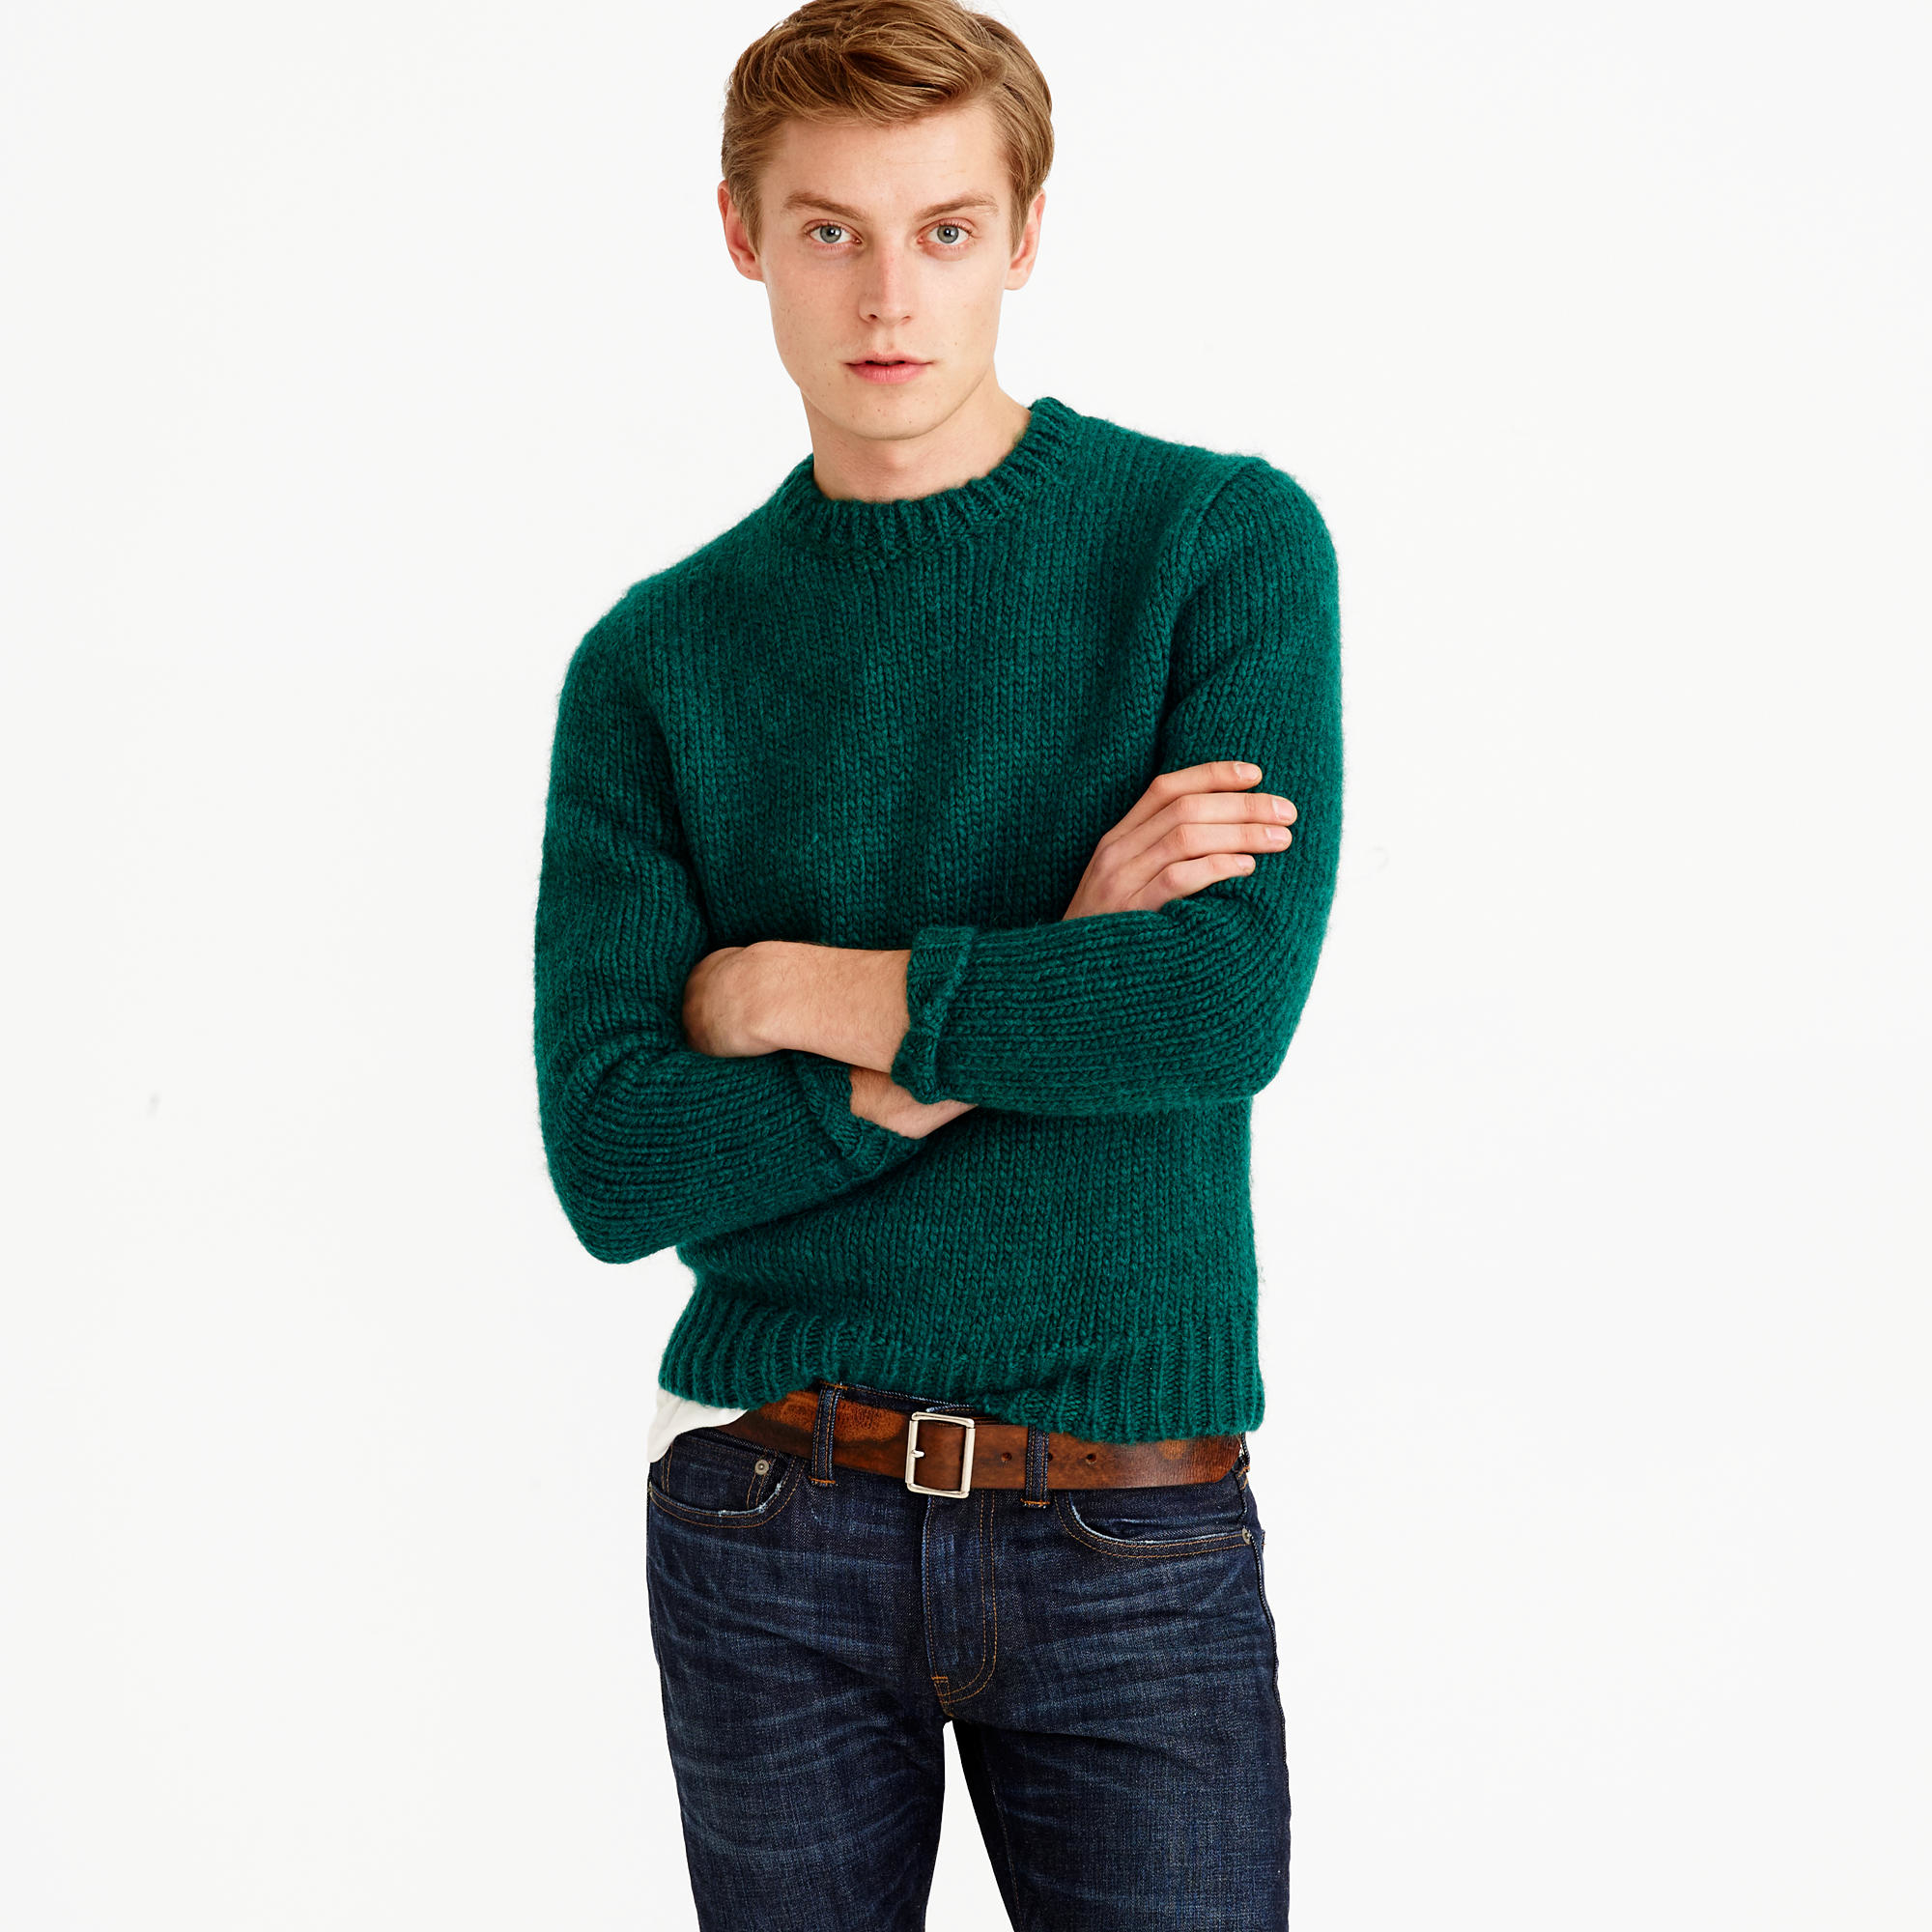 Men's Clothing & Accessories: Men's Italian Knit Sweaters